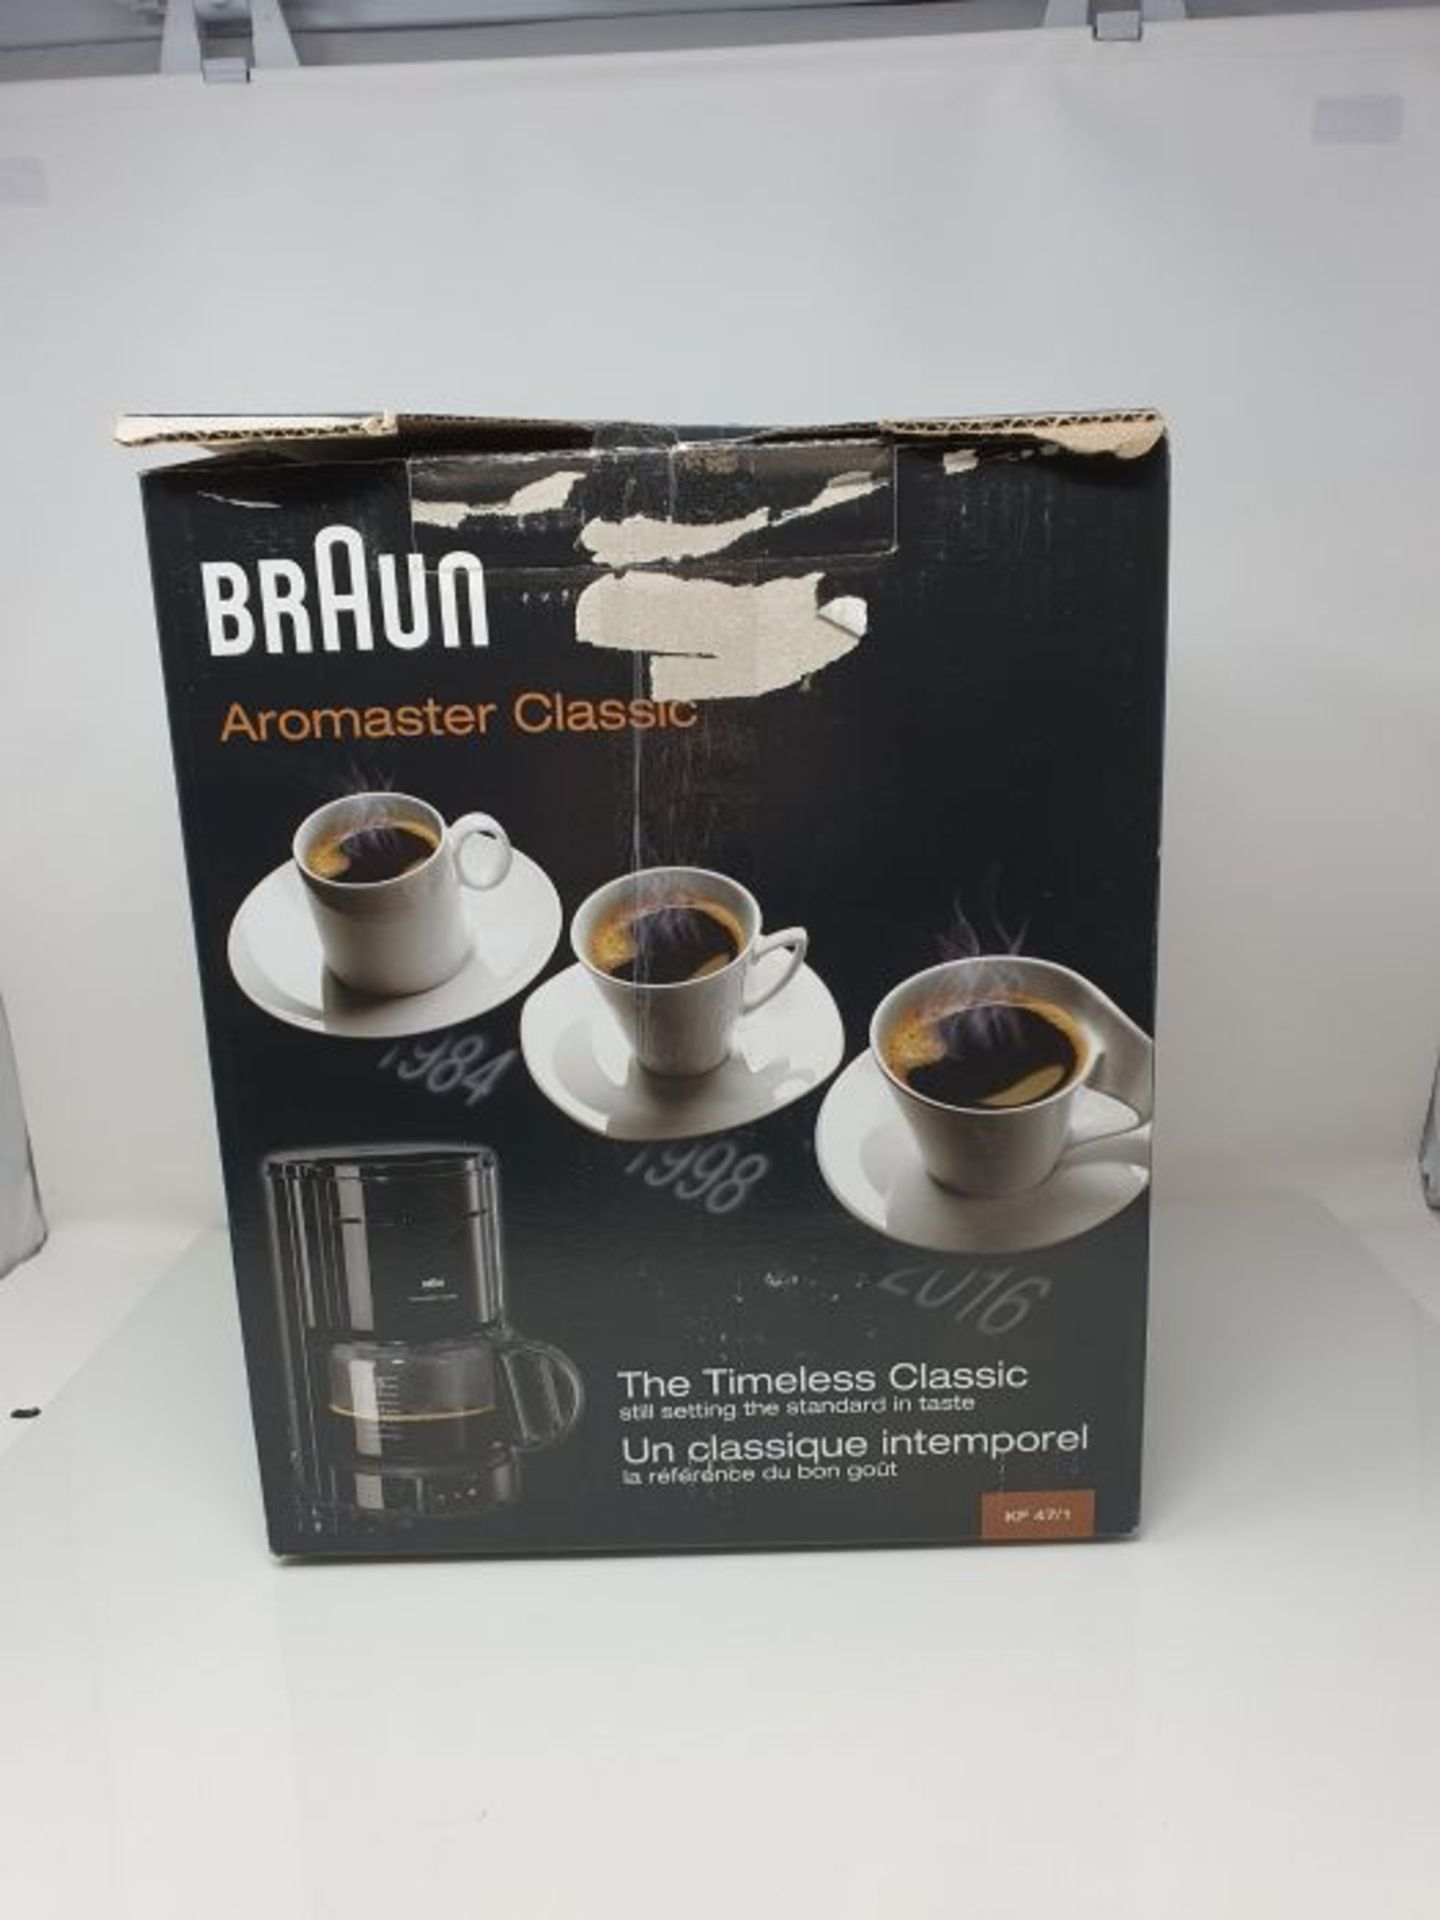 Braun Aromaster KF 47 coffee machine - Image 2 of 3